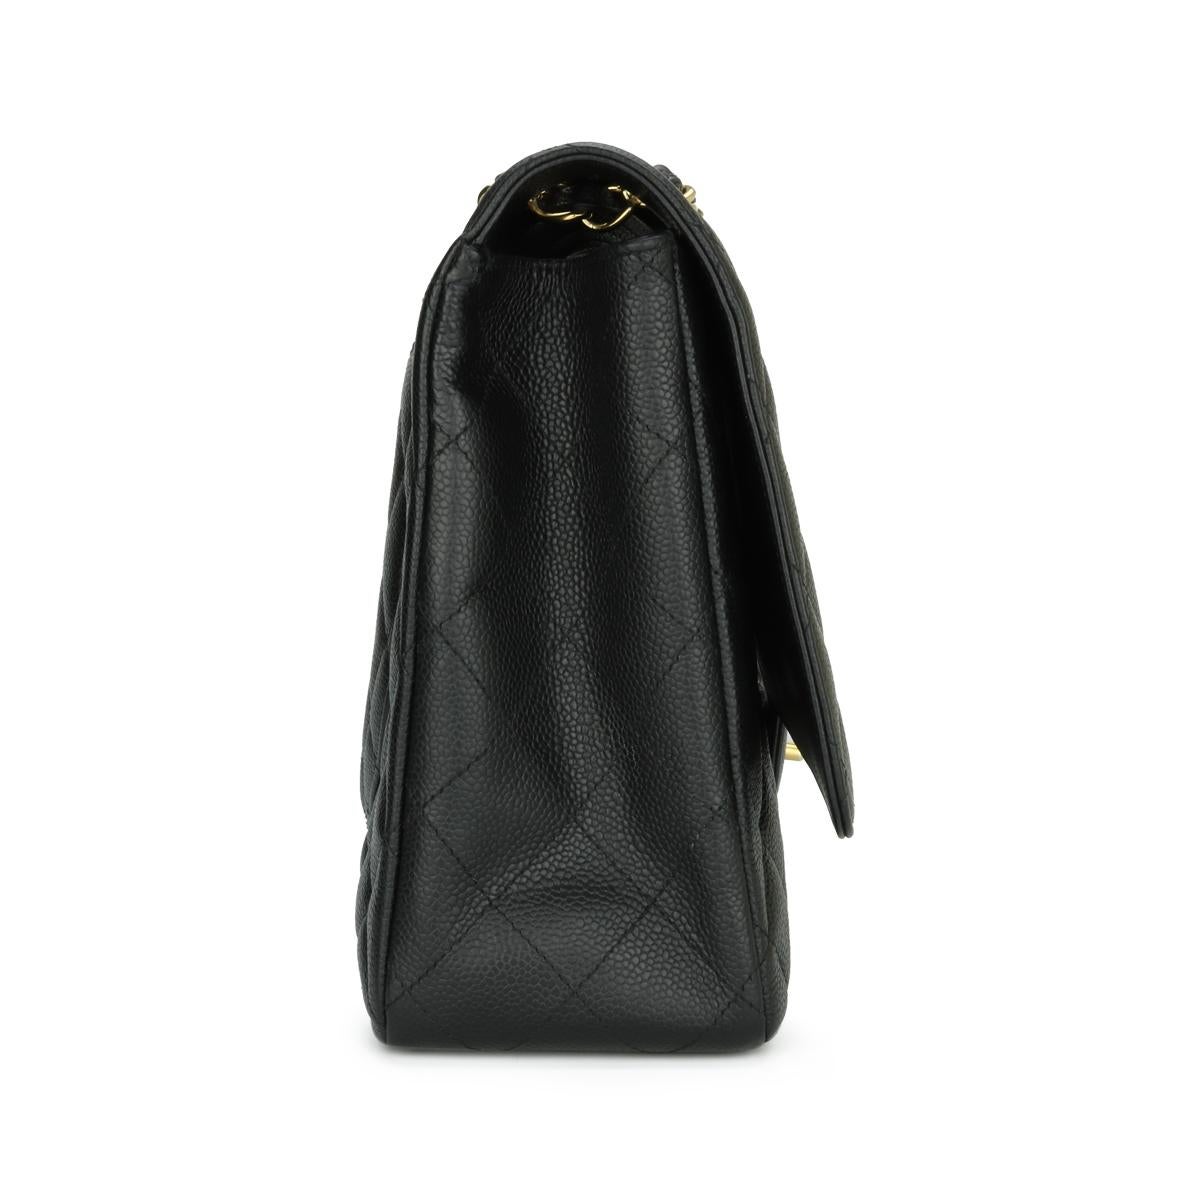 CHANEL Single Flap Maxi Bag Black Caviar with Gold Hardware 2010 1